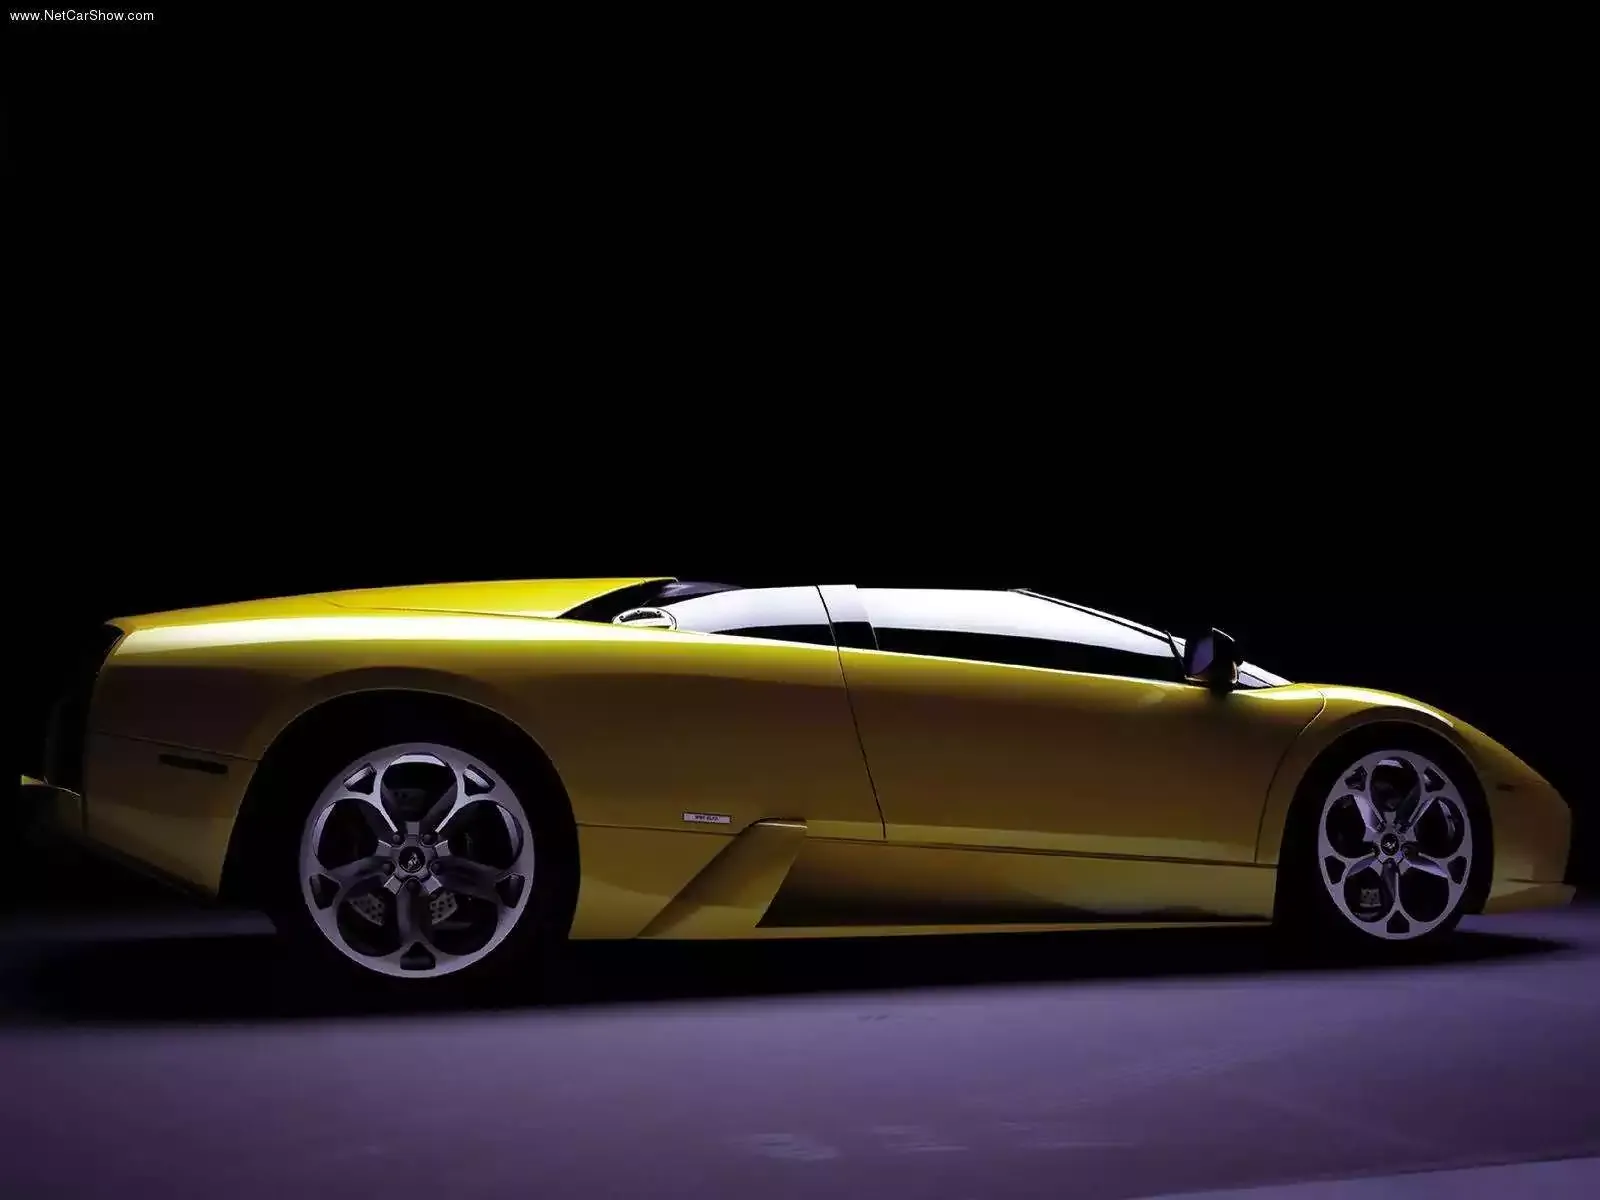 Hình ảnh siêu xe Lamborghini Murcielago Barchetta Concept 2002 & nội ngoại thất